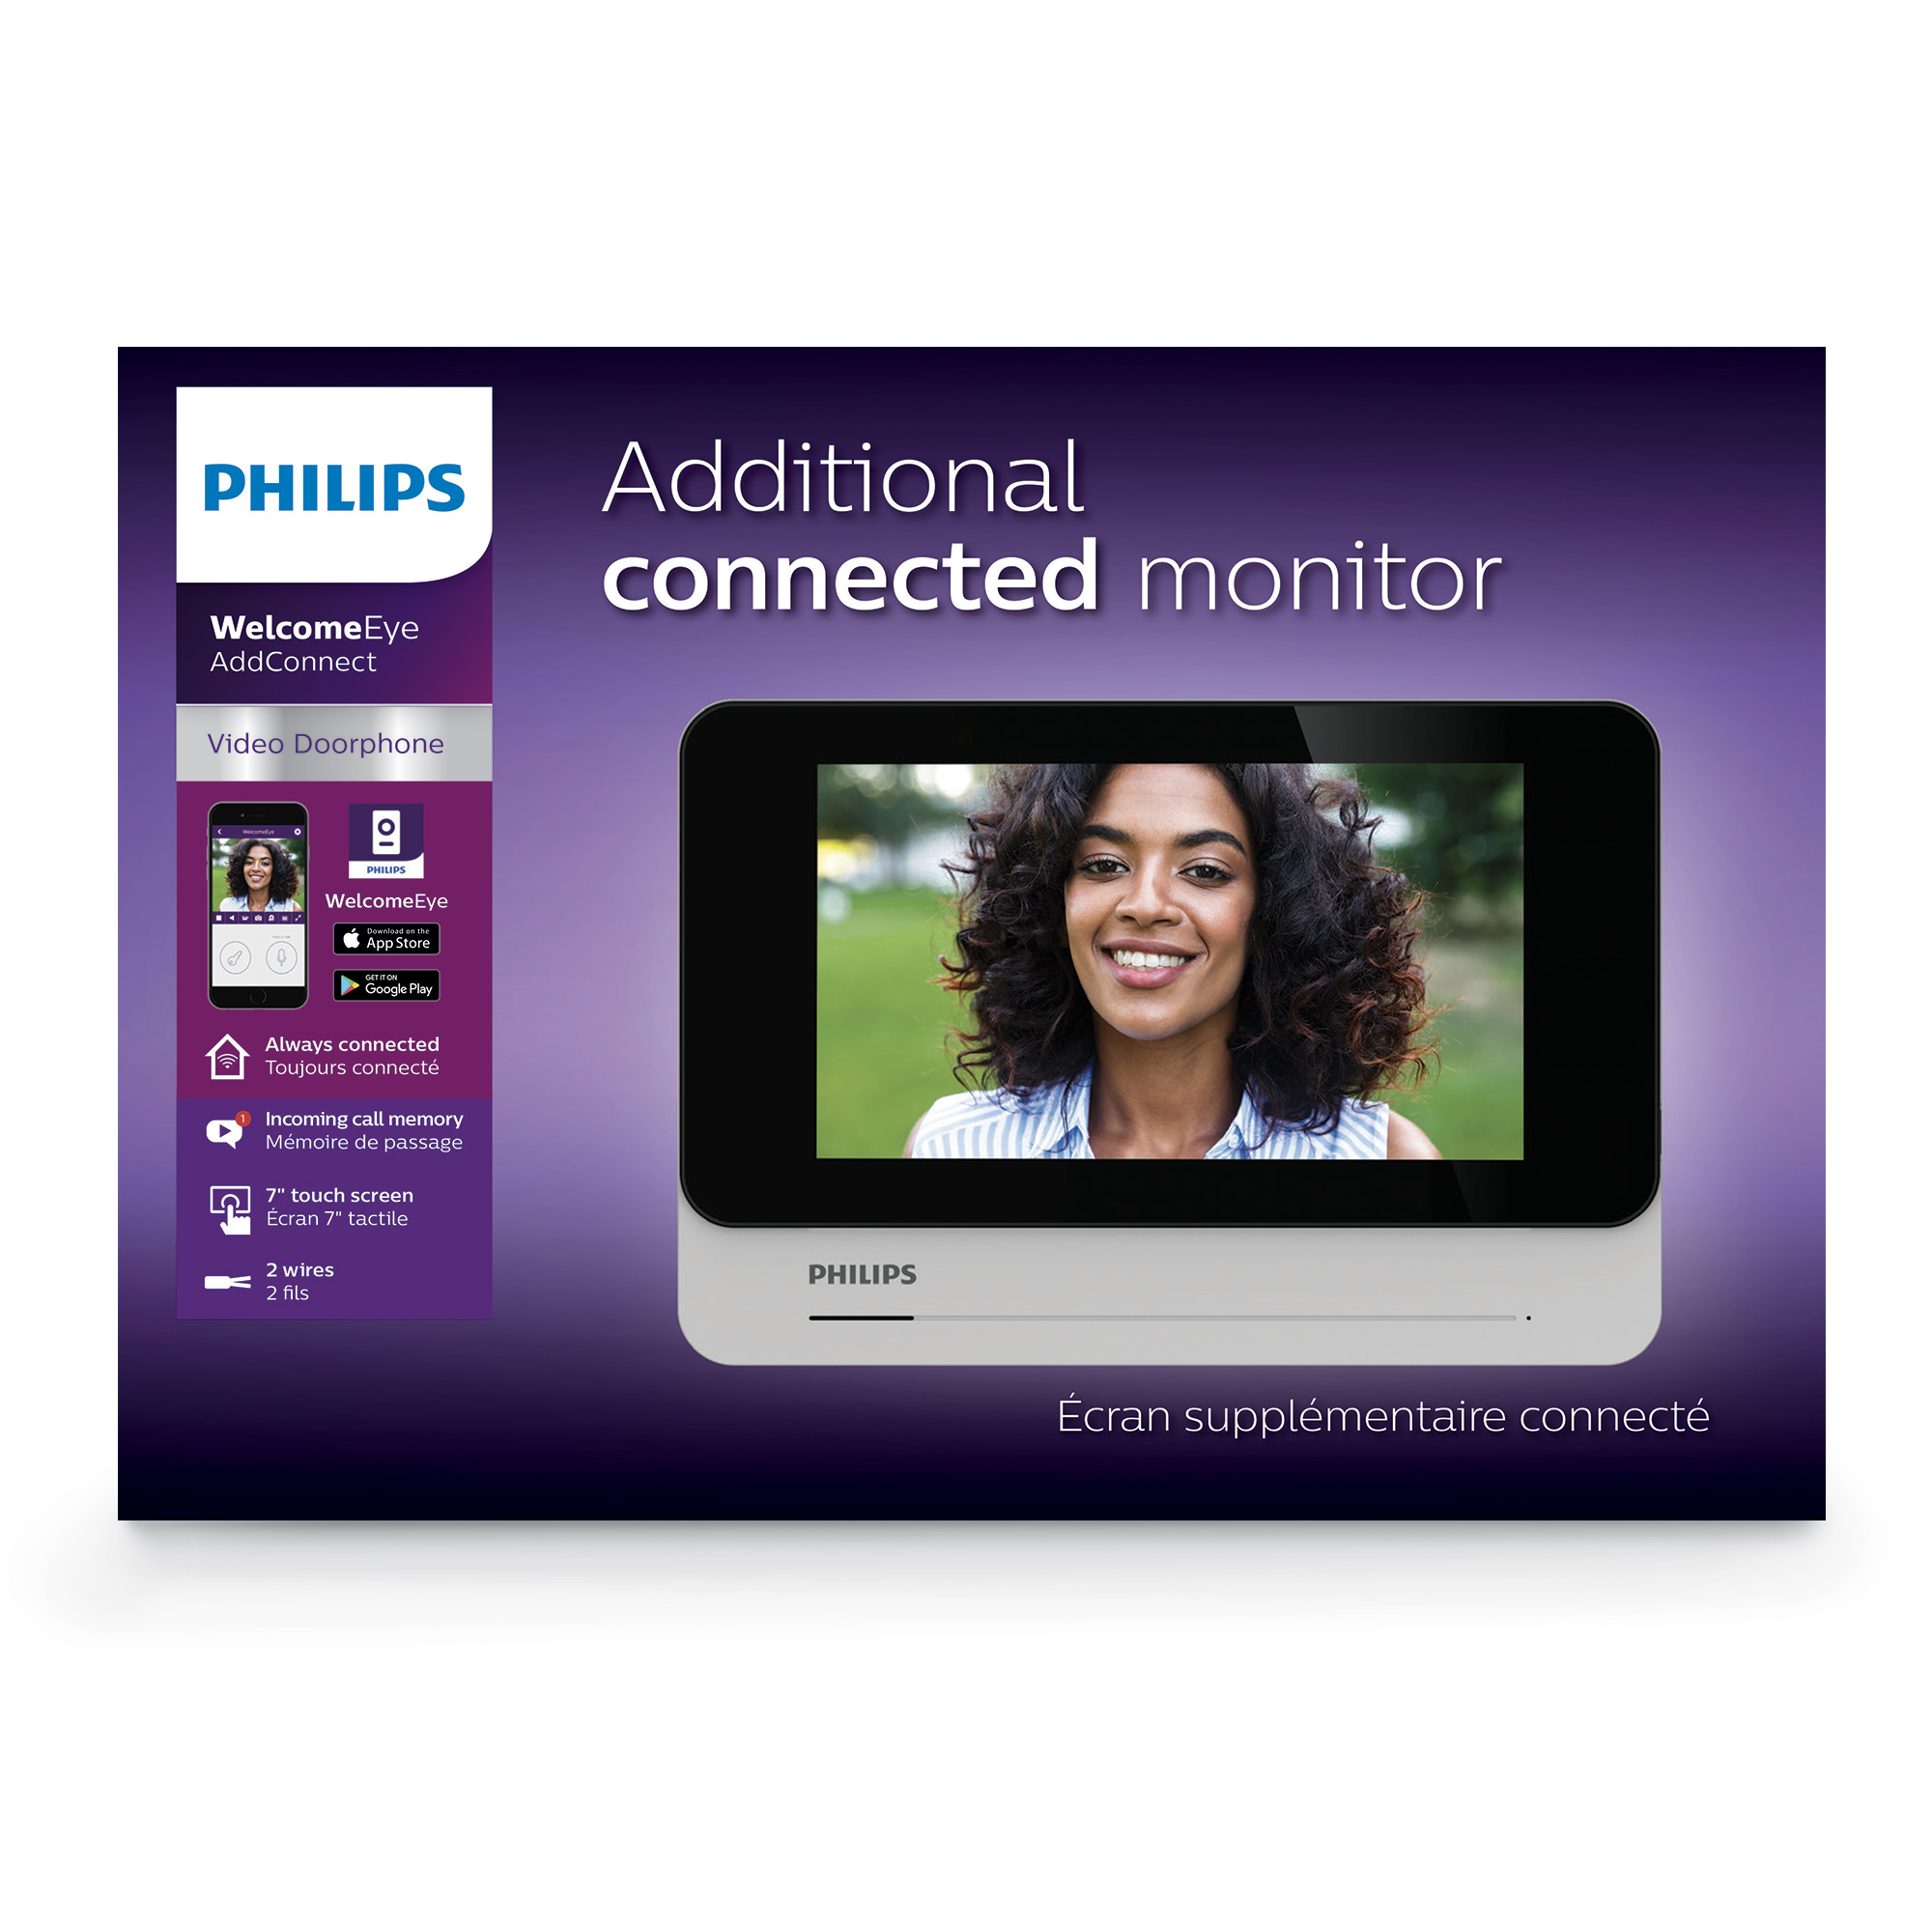 Moniteur Philips WelcomeEye AddConnect (Wifi + 7pouces = 18cm) - Visiophonie